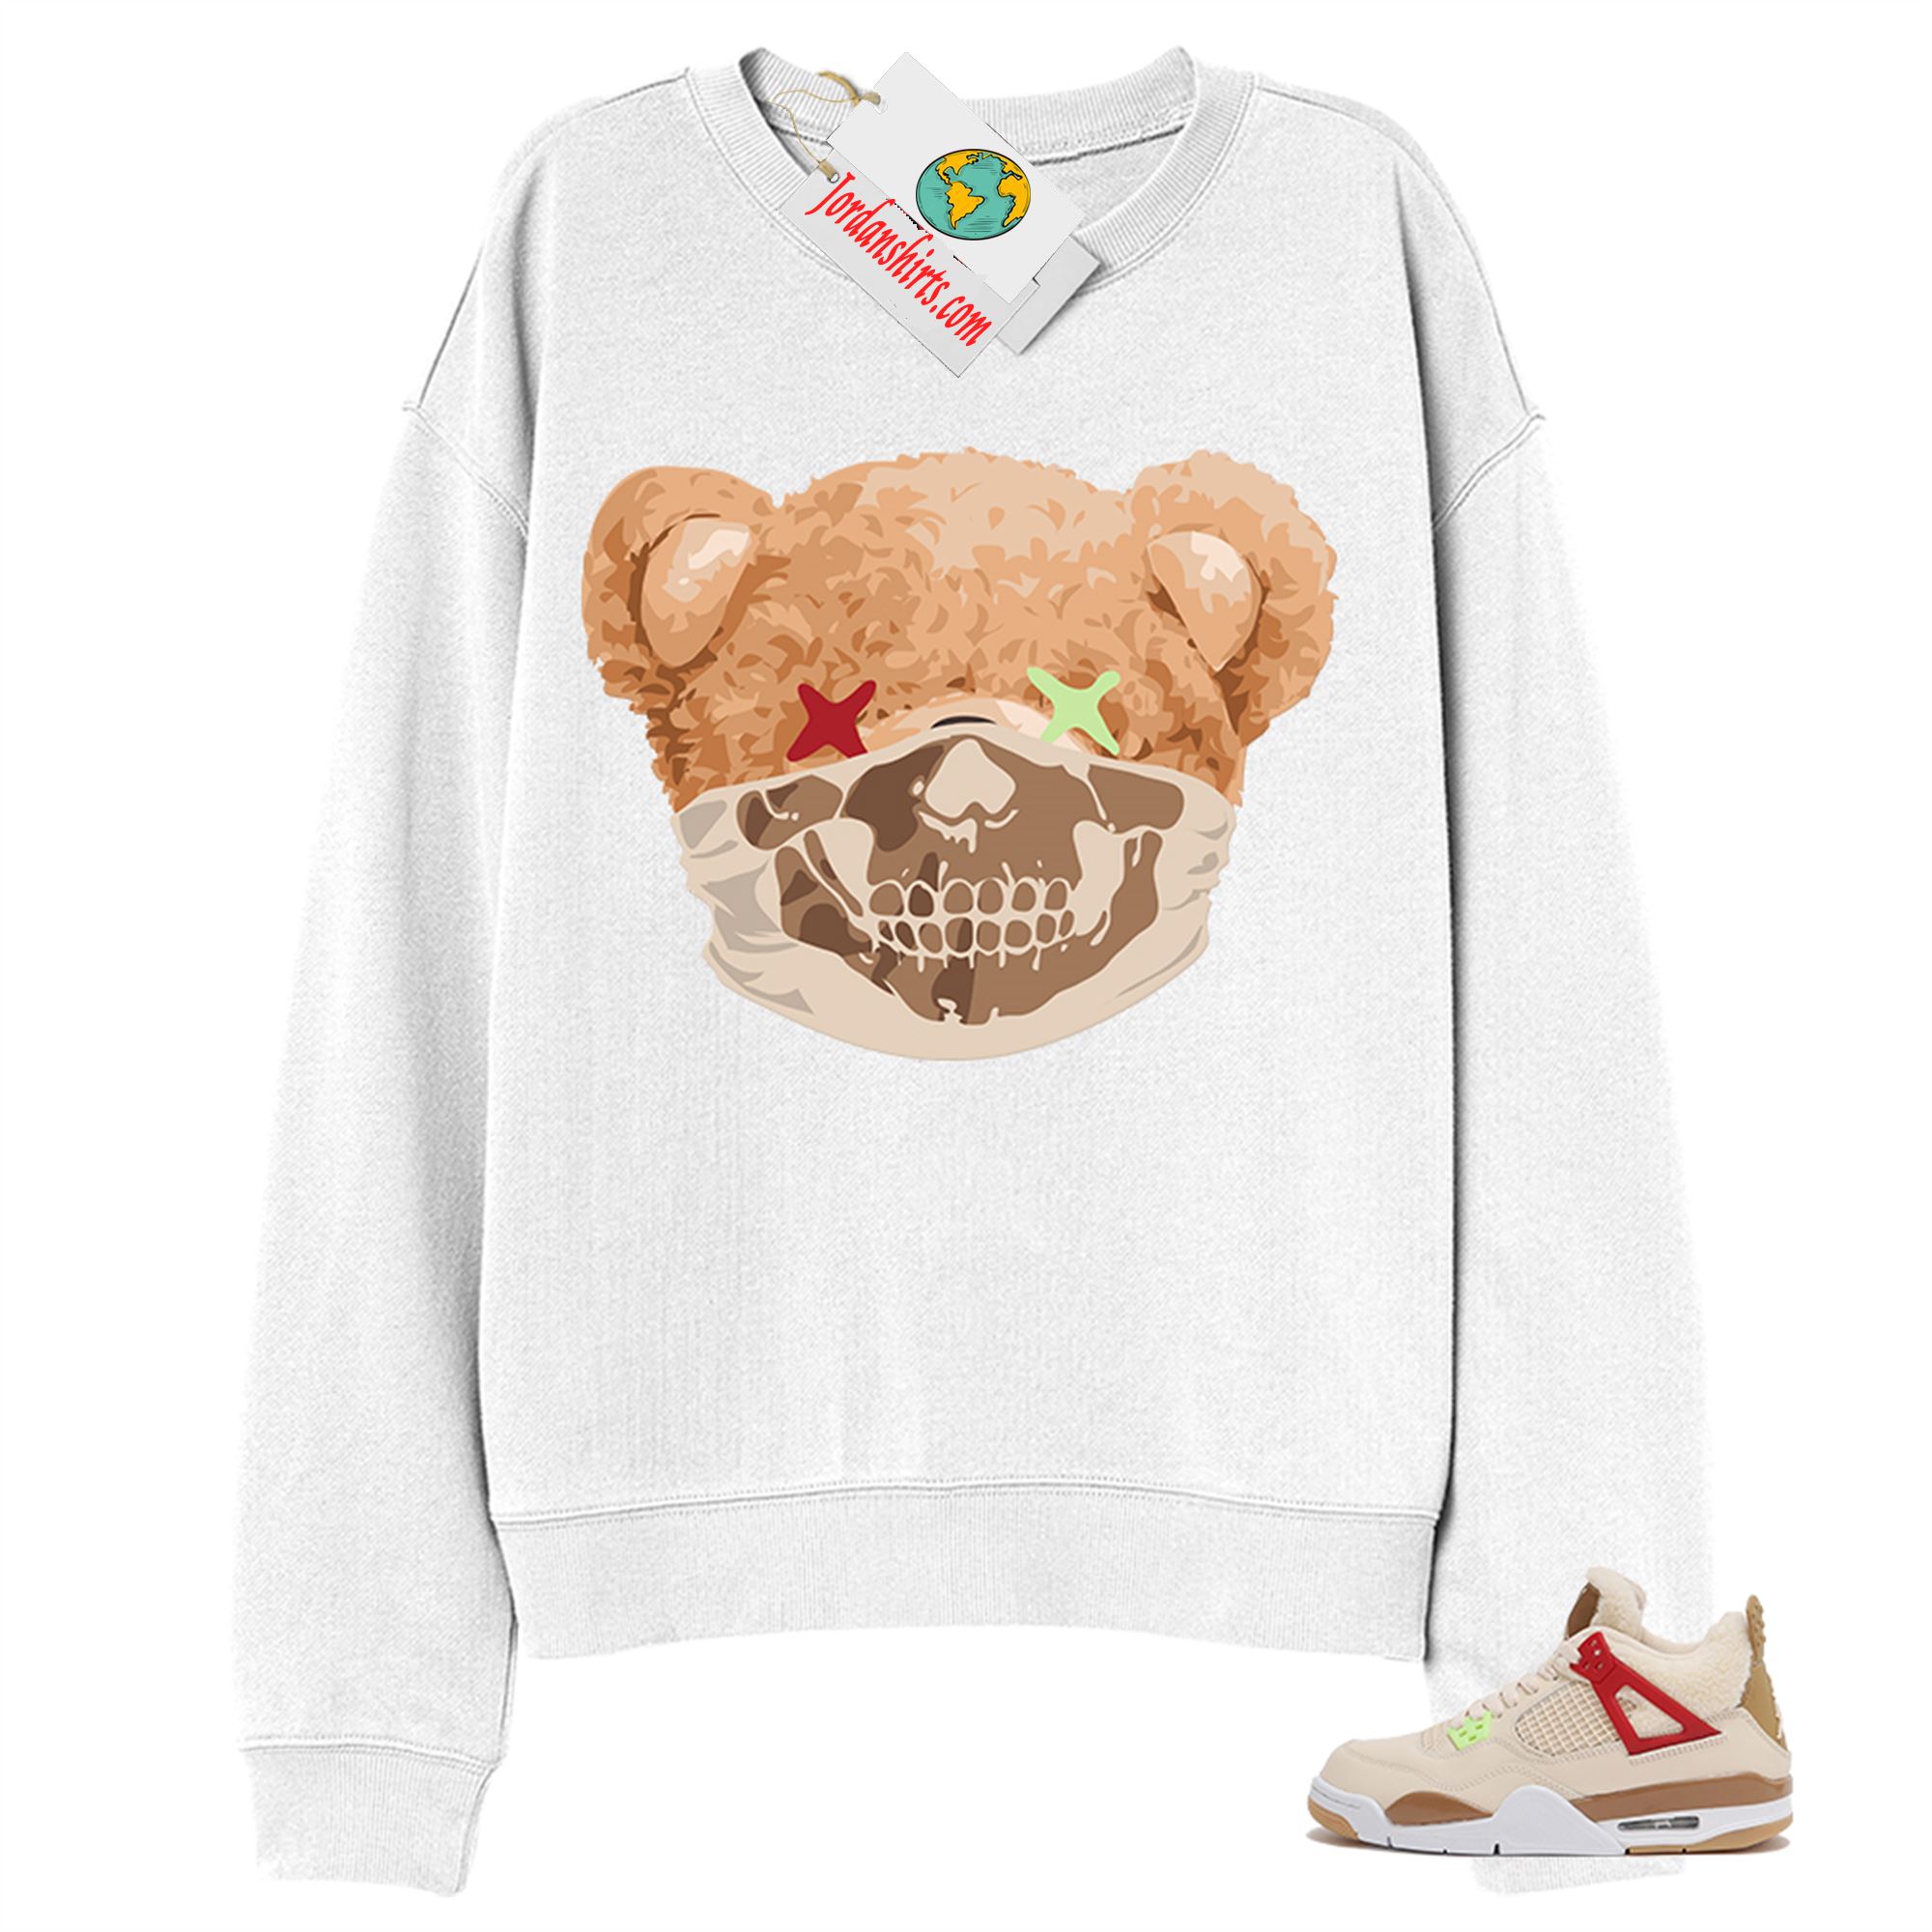 Jordan 4 Sweatshirt, Teddy Bear Skull Bandana White Sweatshirt Air Jordan 4 Wild Things 4s Size Up To 5xl